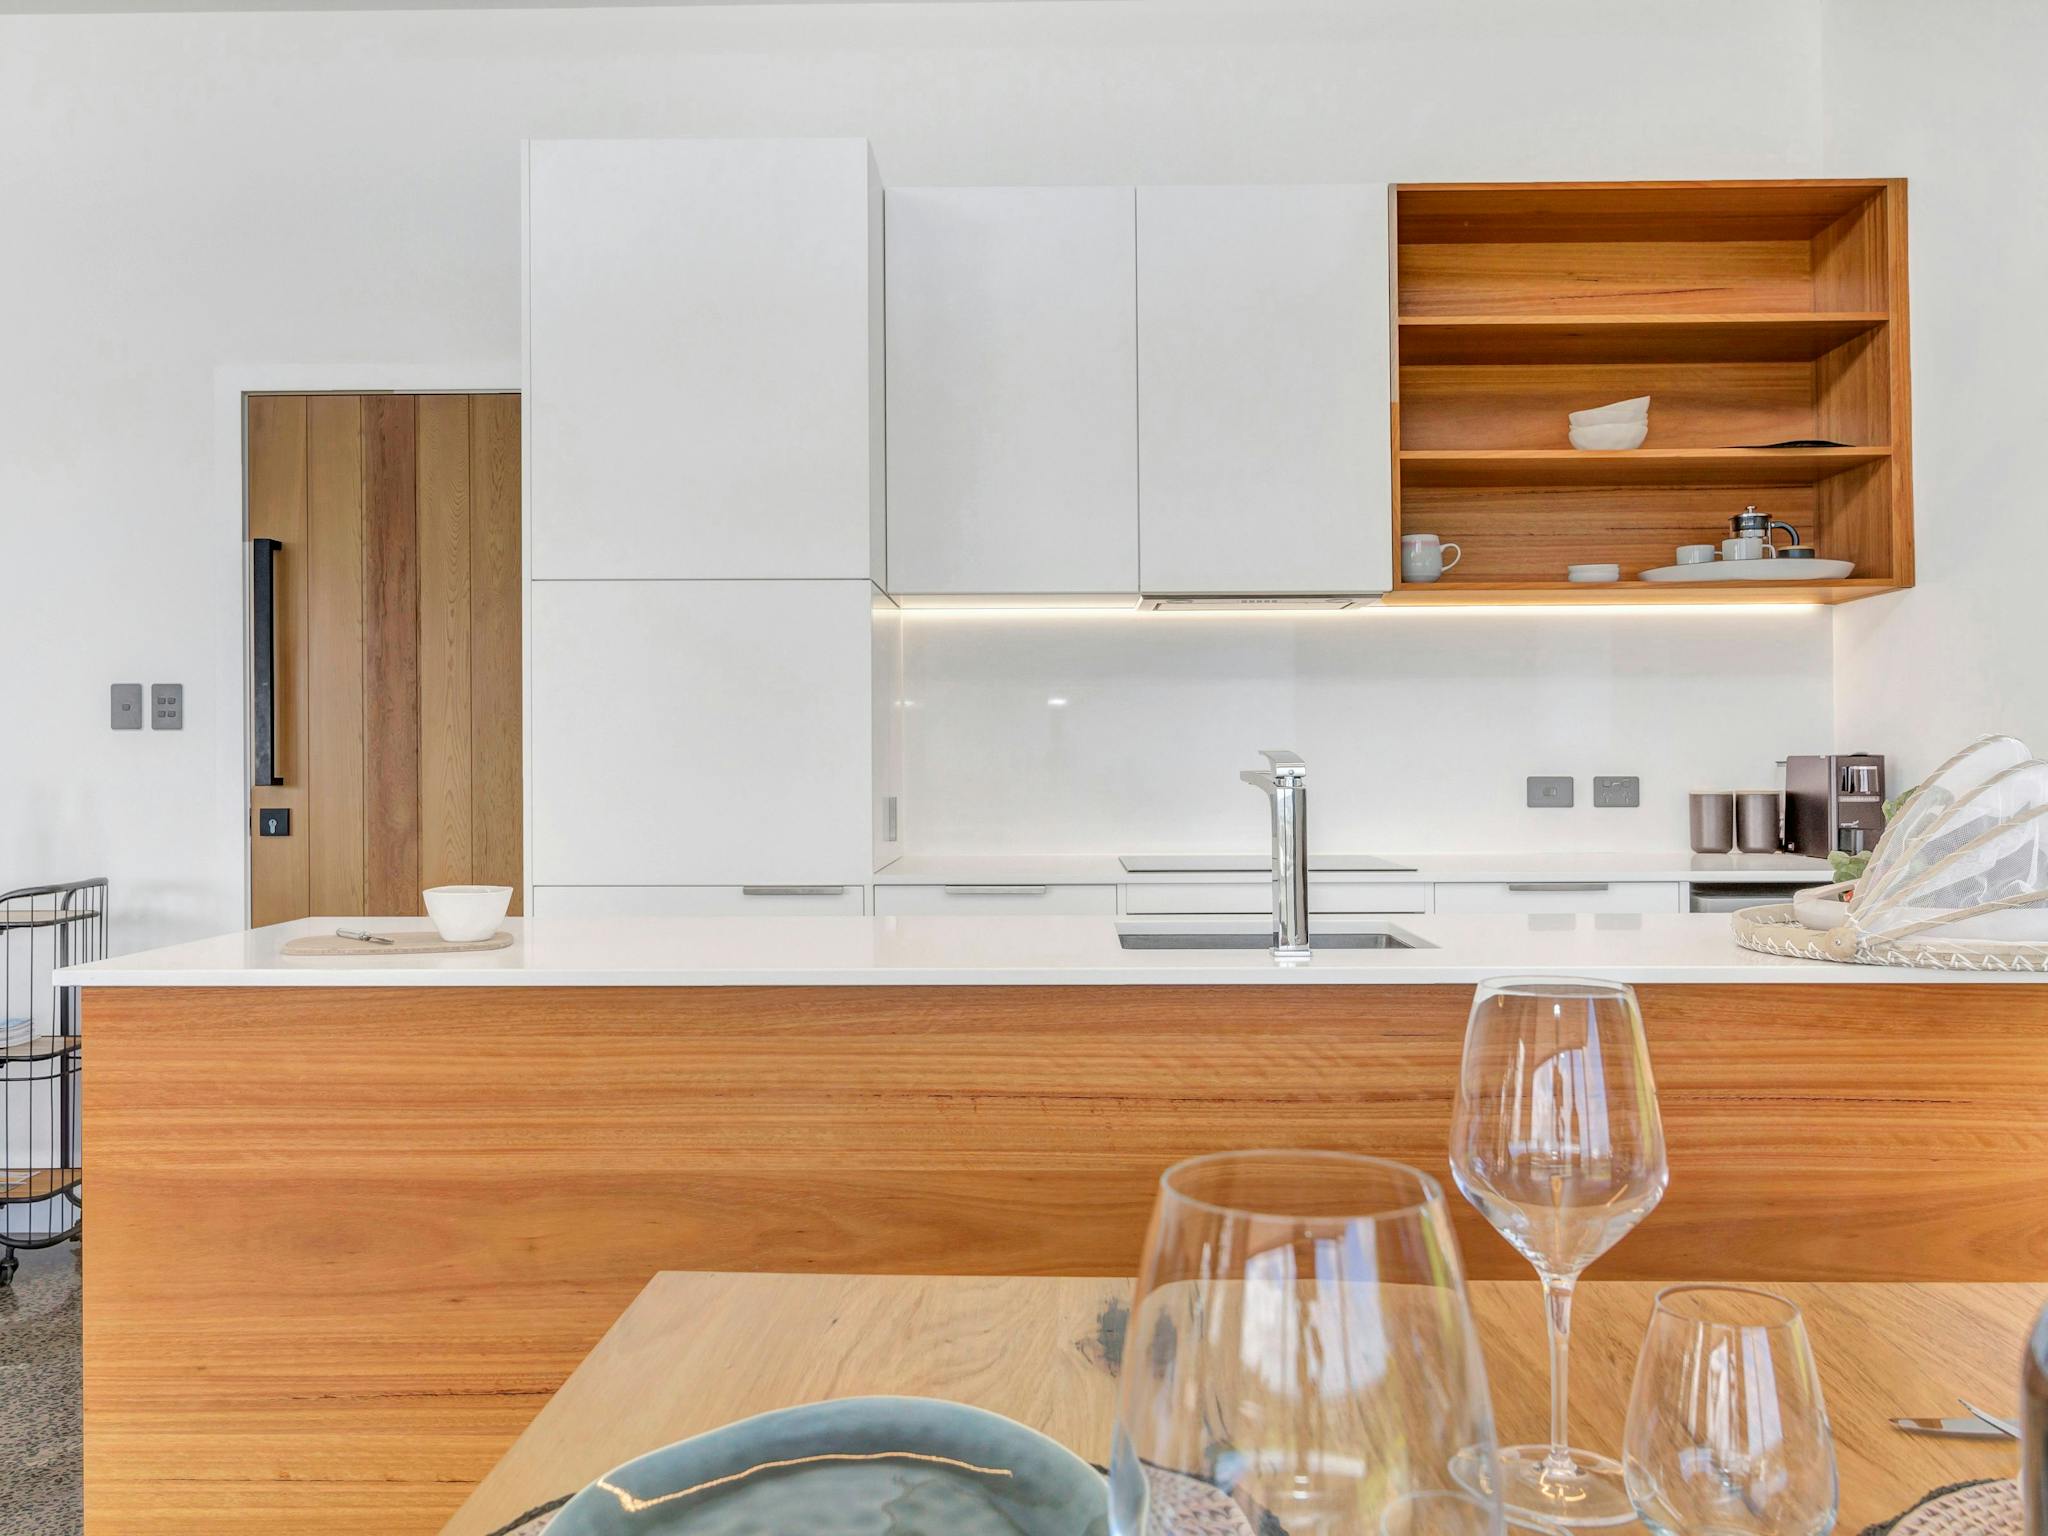 Luxury kitchen including luxury glassware